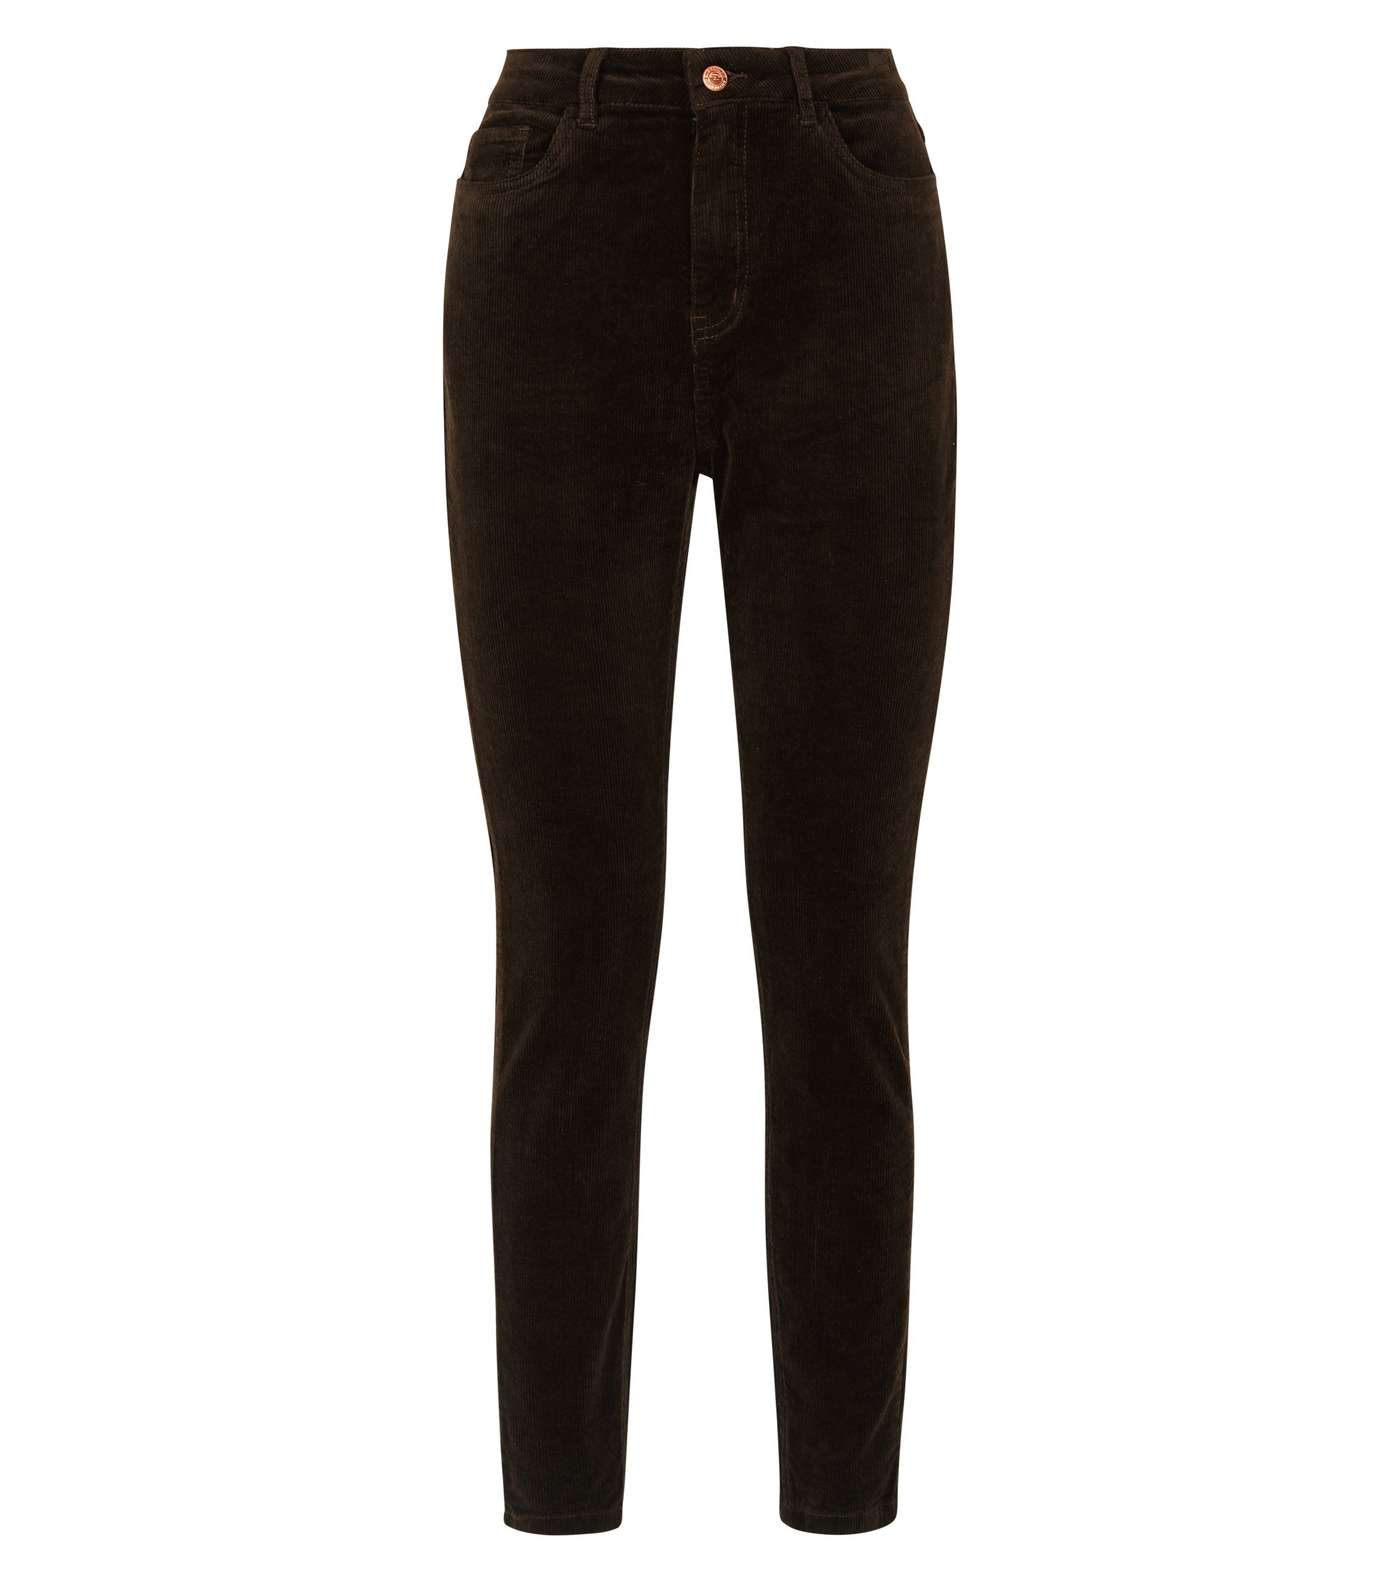 Khaki Corduroy Super Skinny Dahlia Jeans Image 4